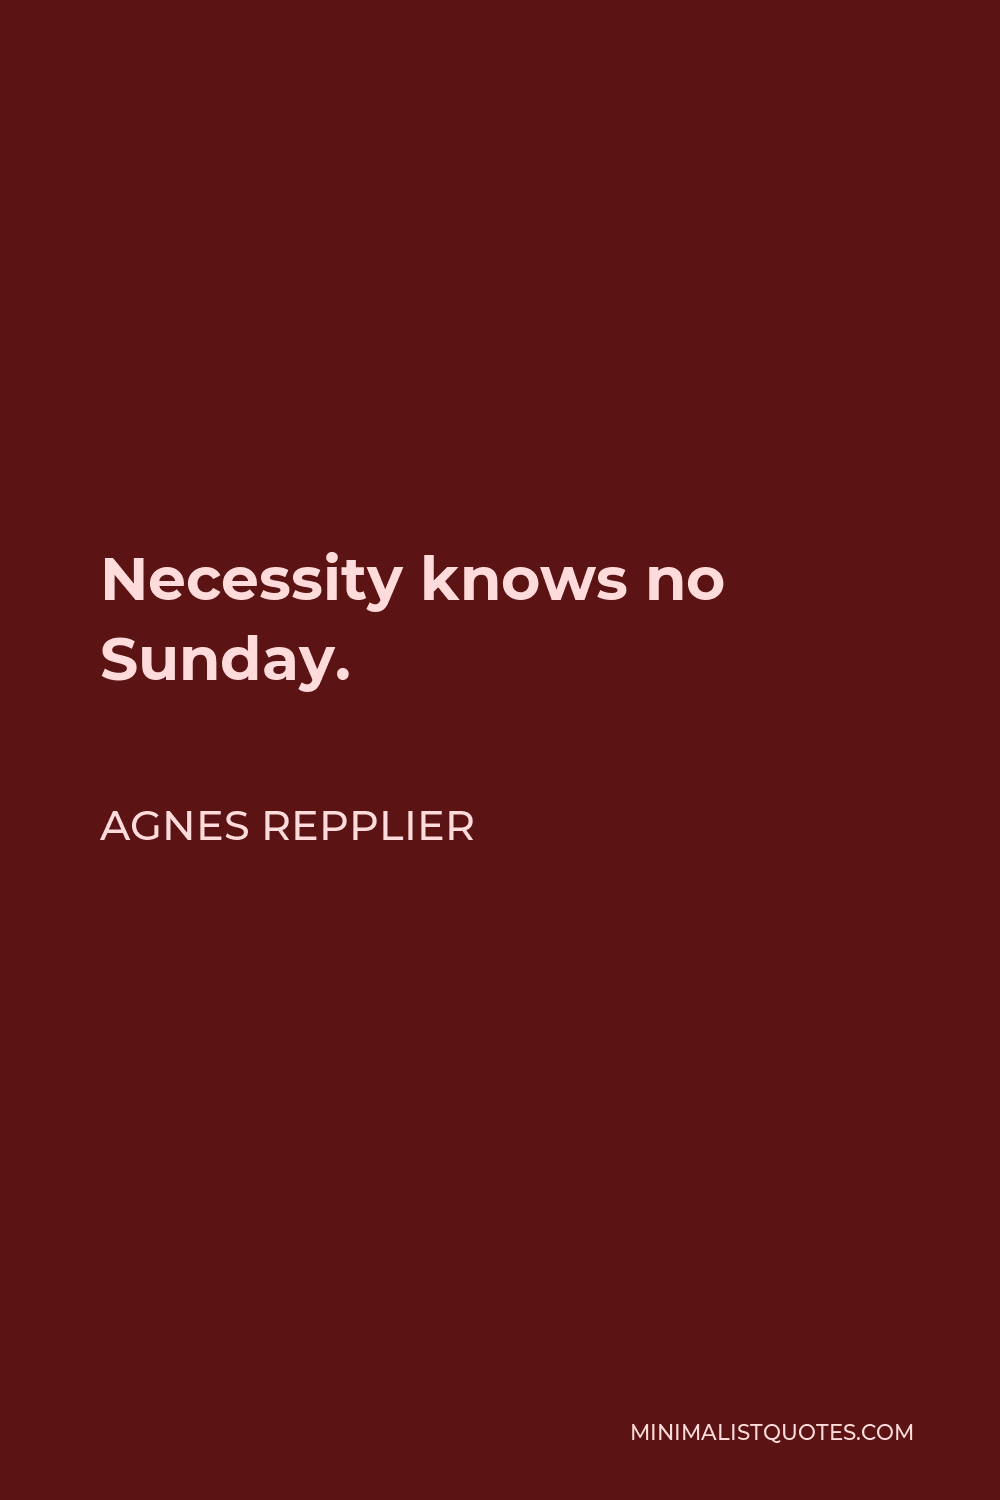 Agnes Repplier Quote - Necessity knows no Sunday.